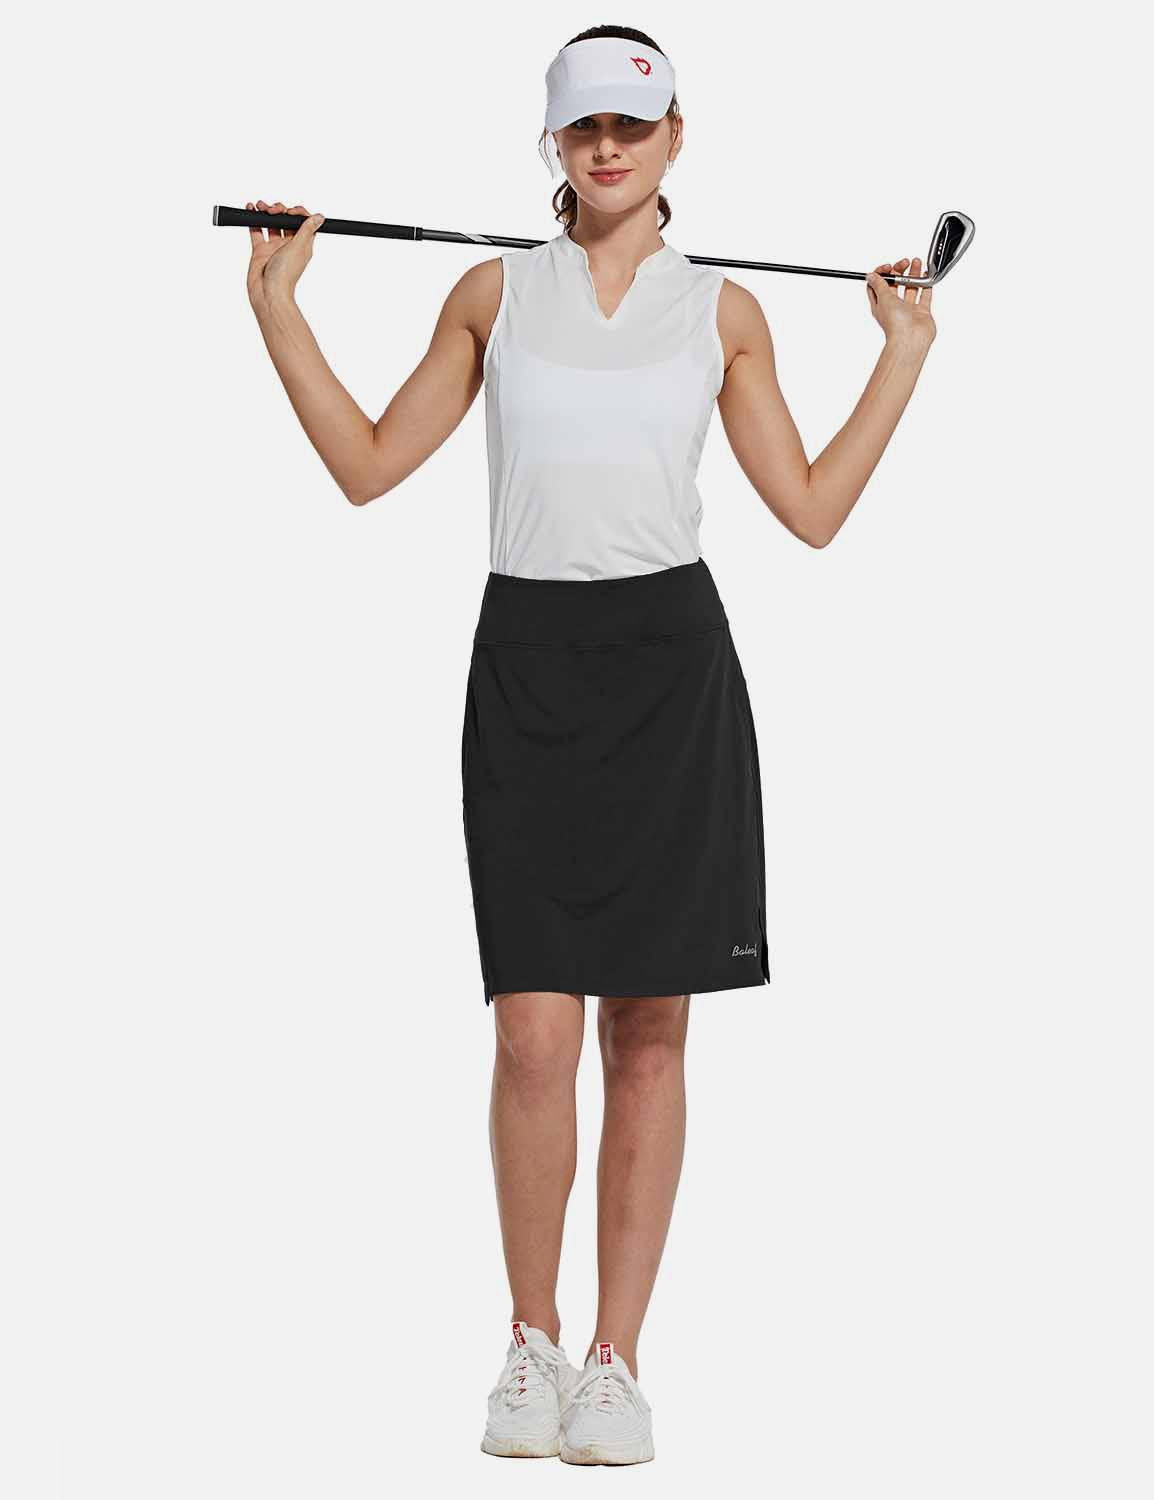 Baleaf Womens UPF50+ 2-in-1 Knee-Length Golf Skorts w Mesh Lining cbd002 Black Full